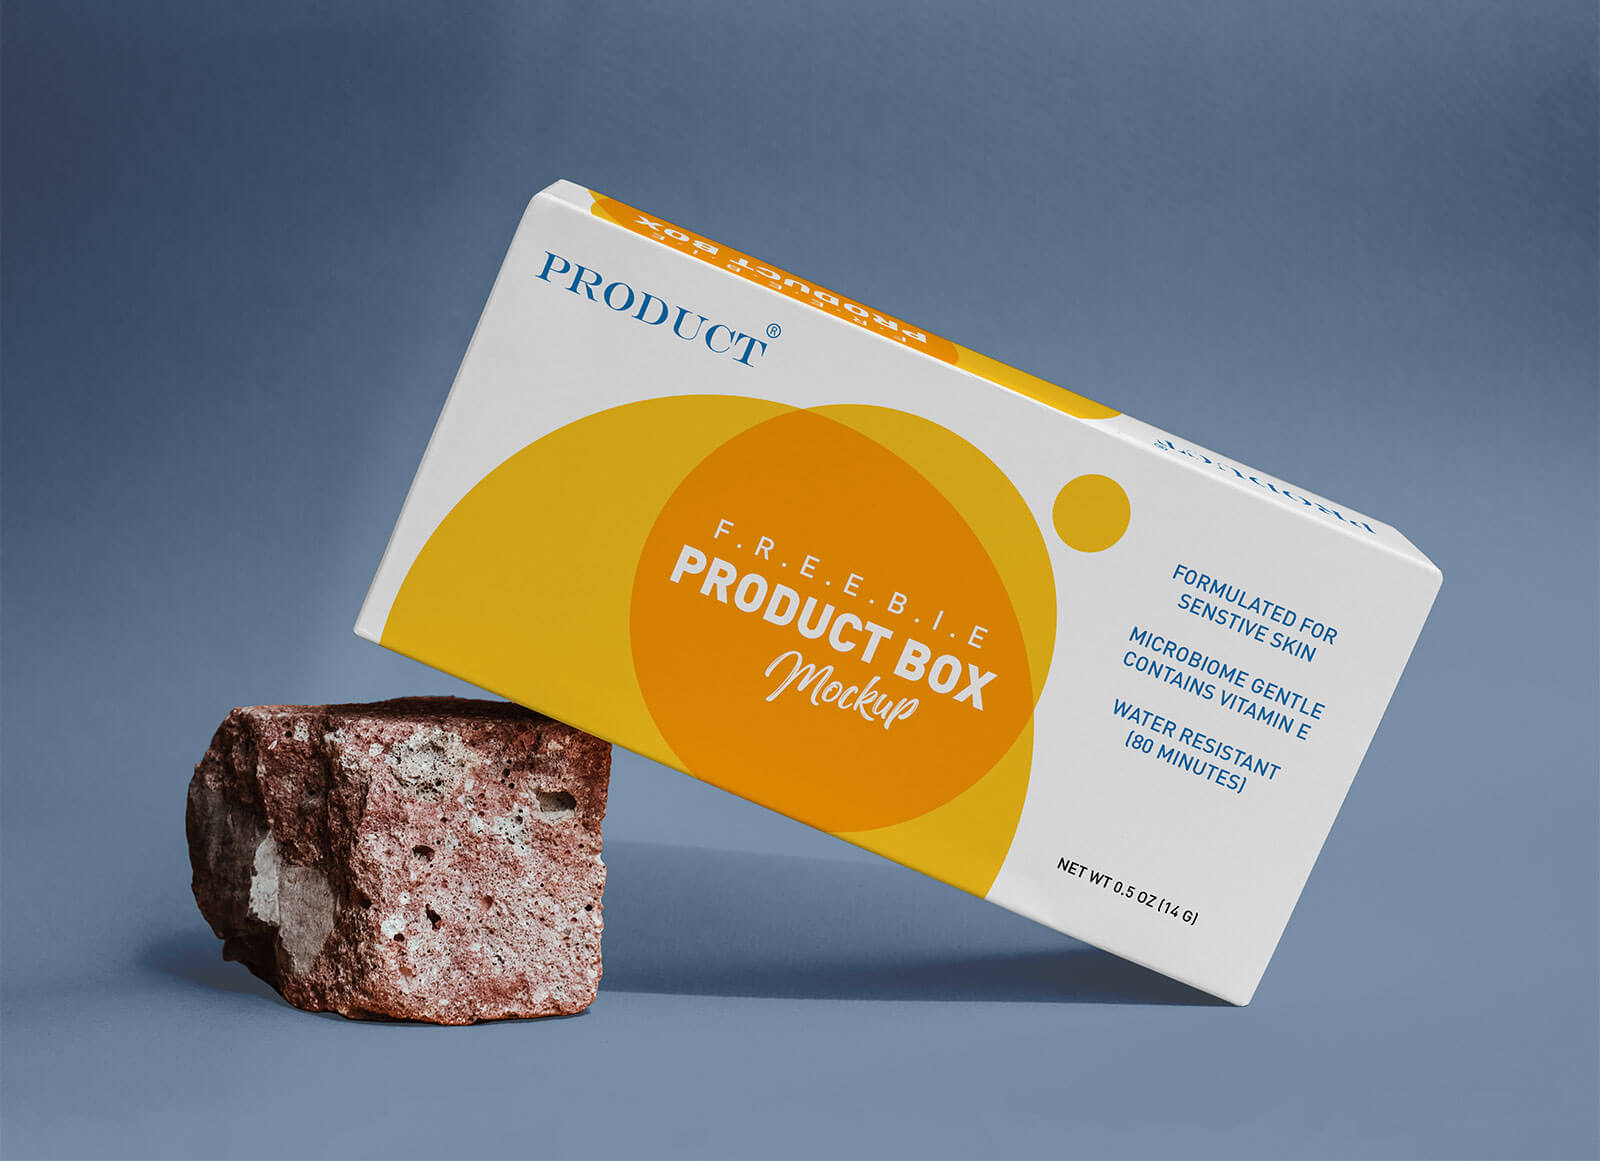 Free-Product-Box-on-Rock-Mockup-PSD